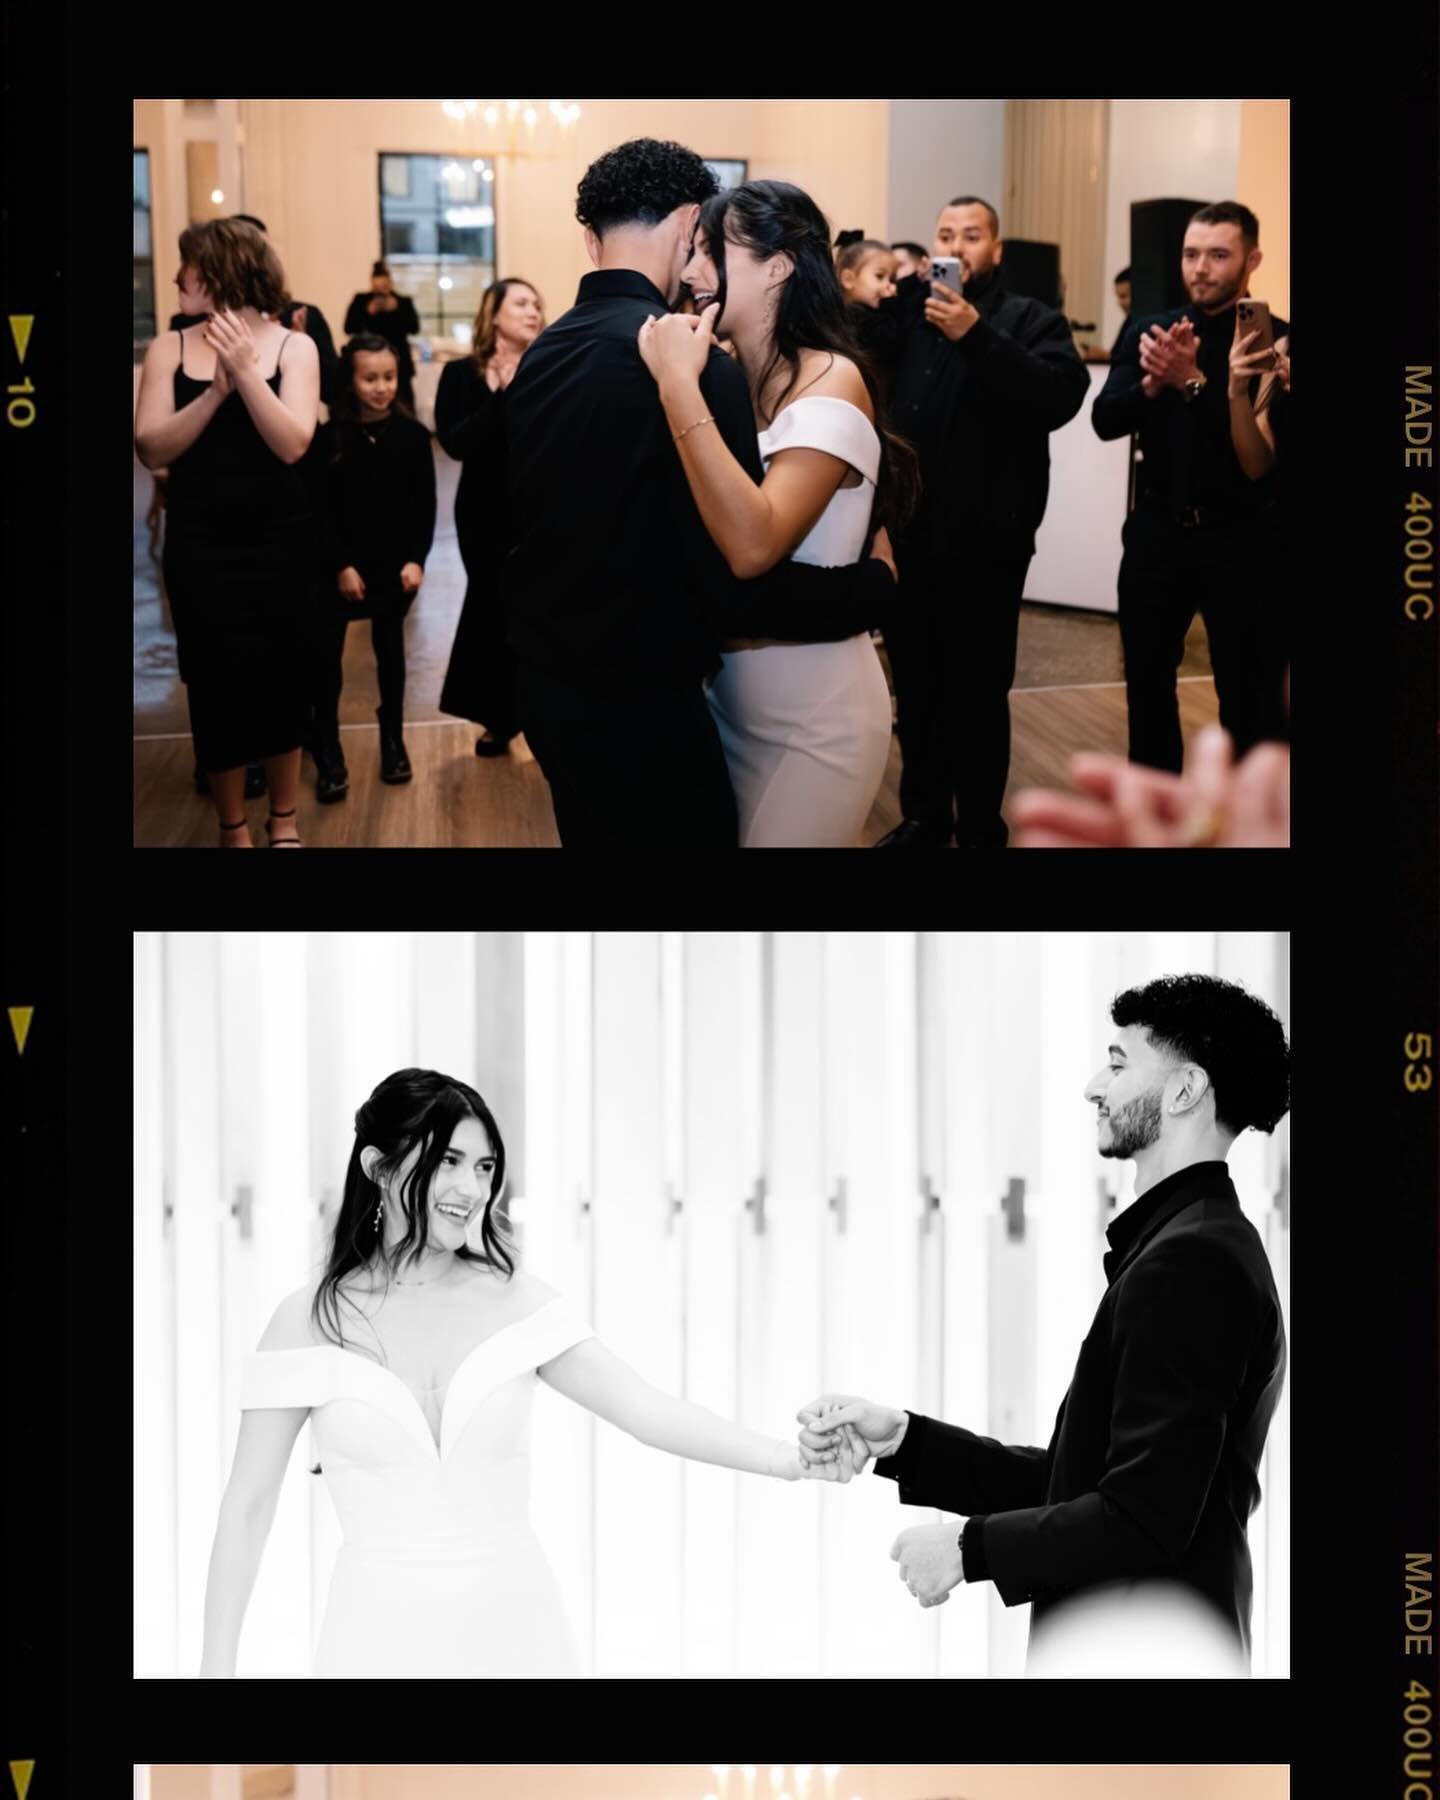 ~First dance intimate moments ~
.
.
.
.
.
.
.
.
#charlottewedding #charlotteweddingphotographer #charlotteweddingvideographer #ncweddingphotographer #ncweddingvideograper